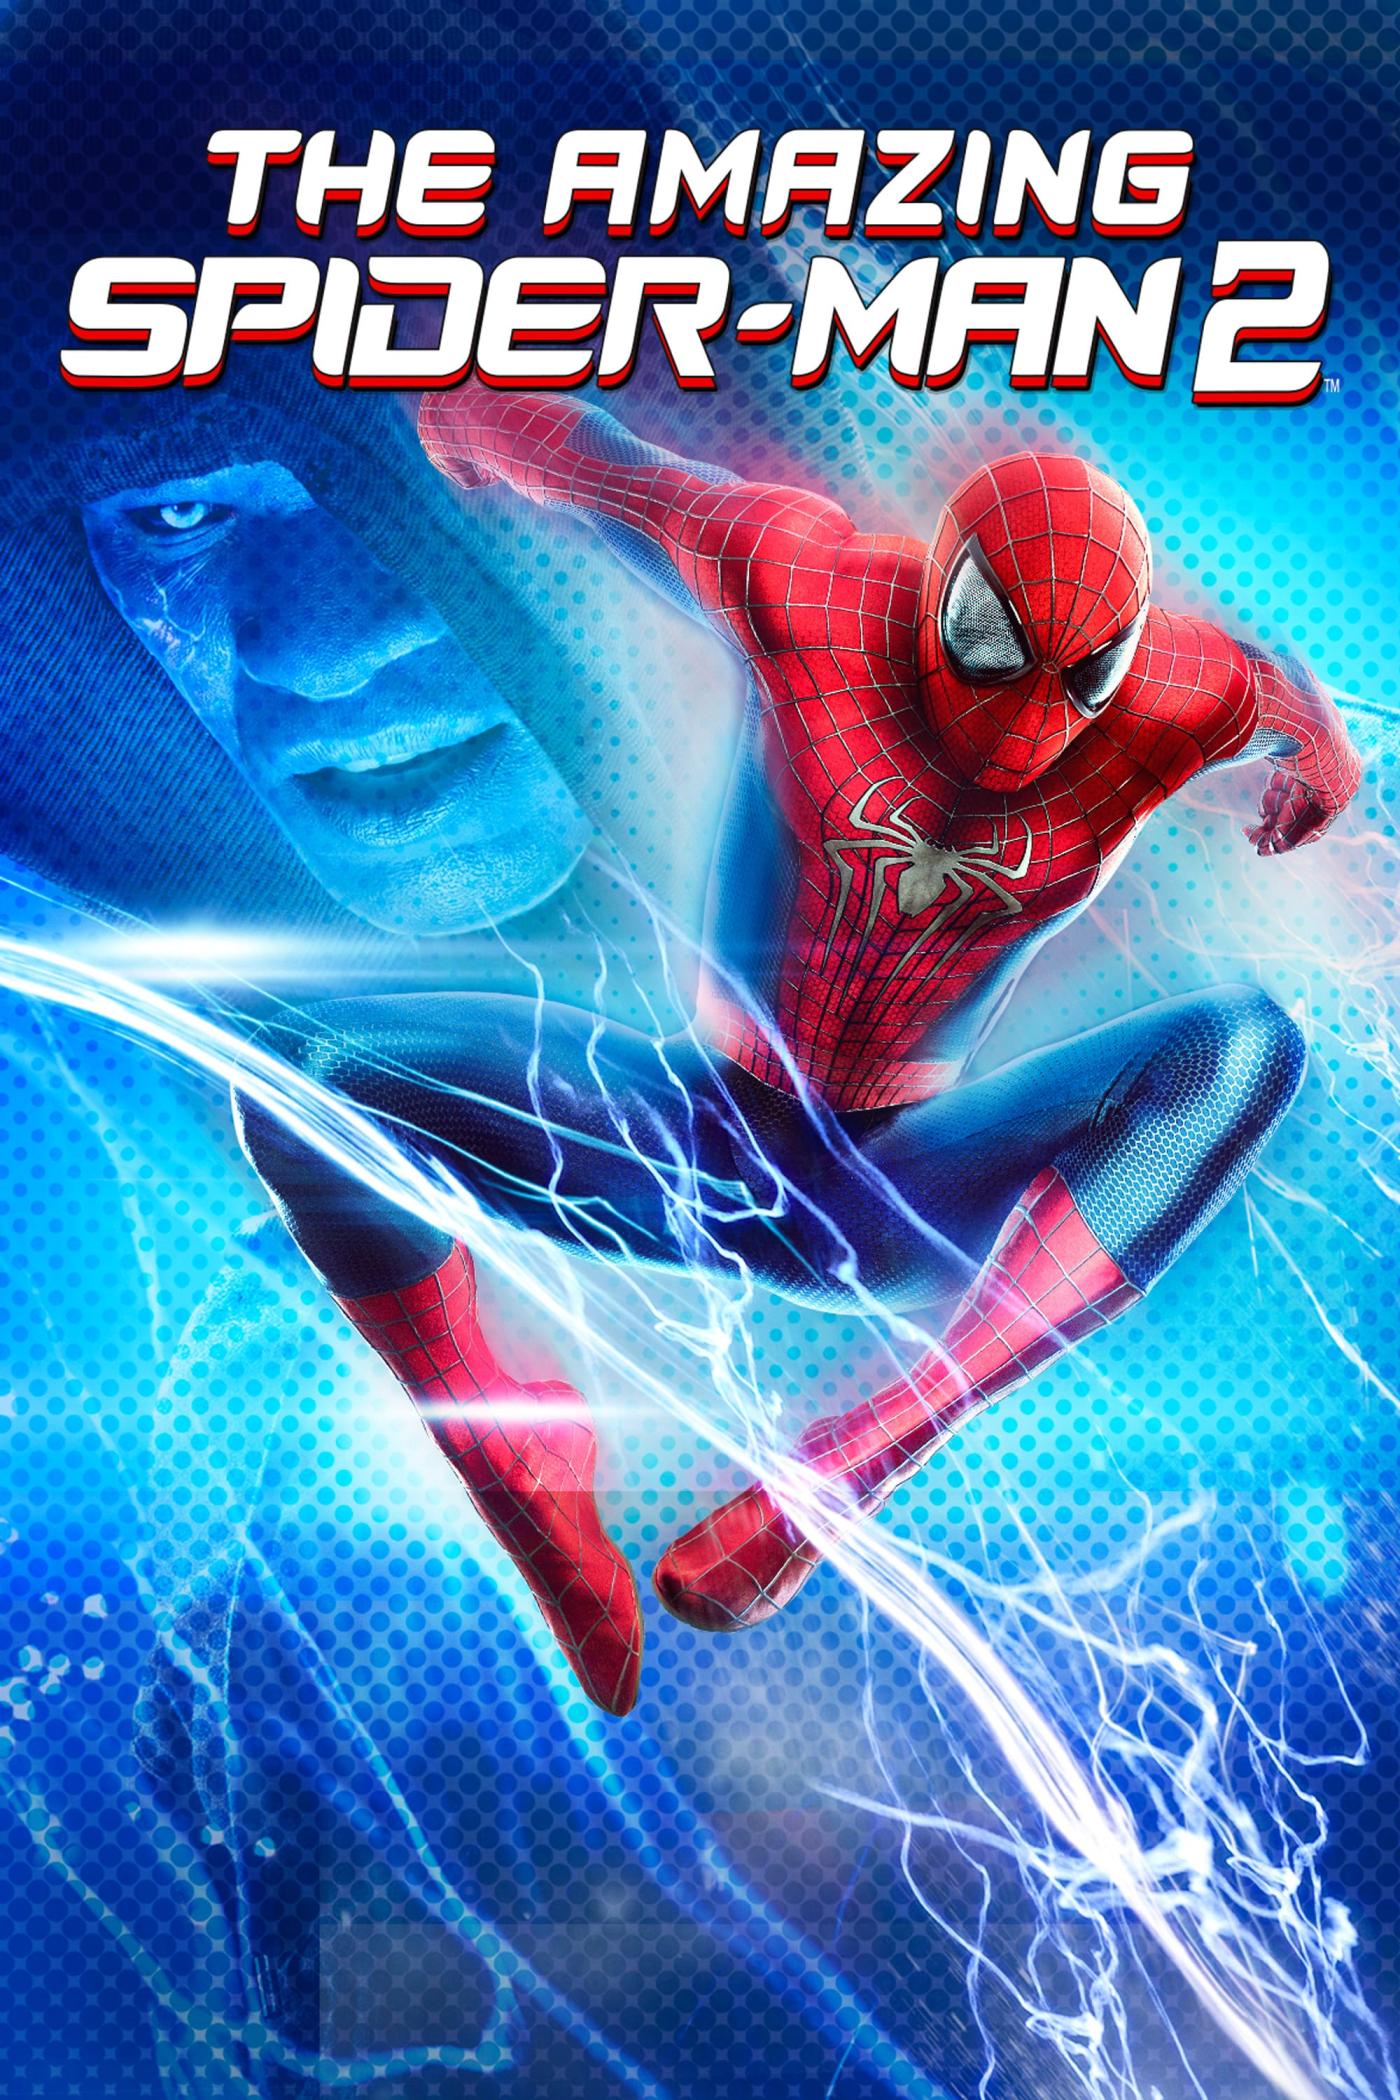 The Amazing Spider-Man 2 - Key Art